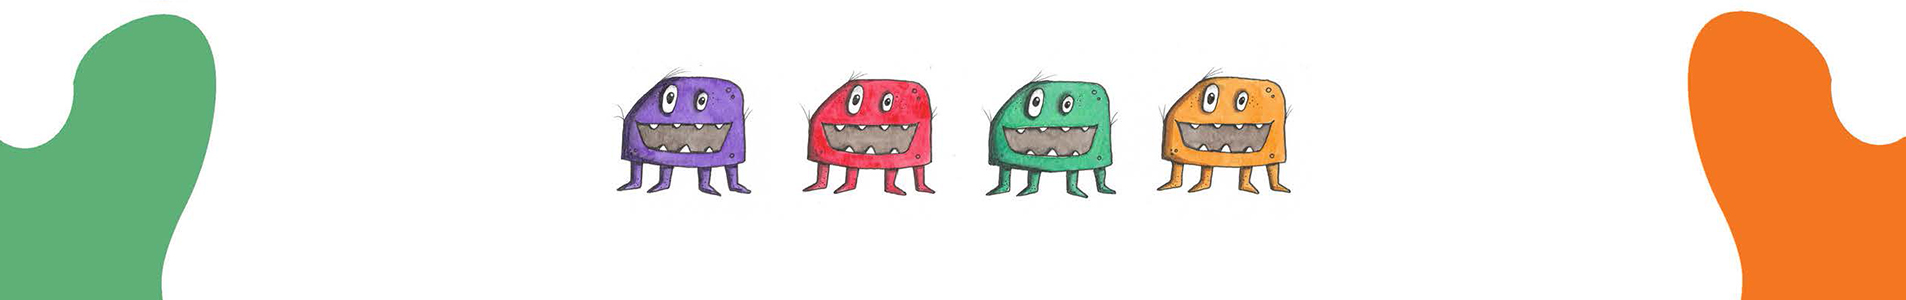 Four monsters illustration